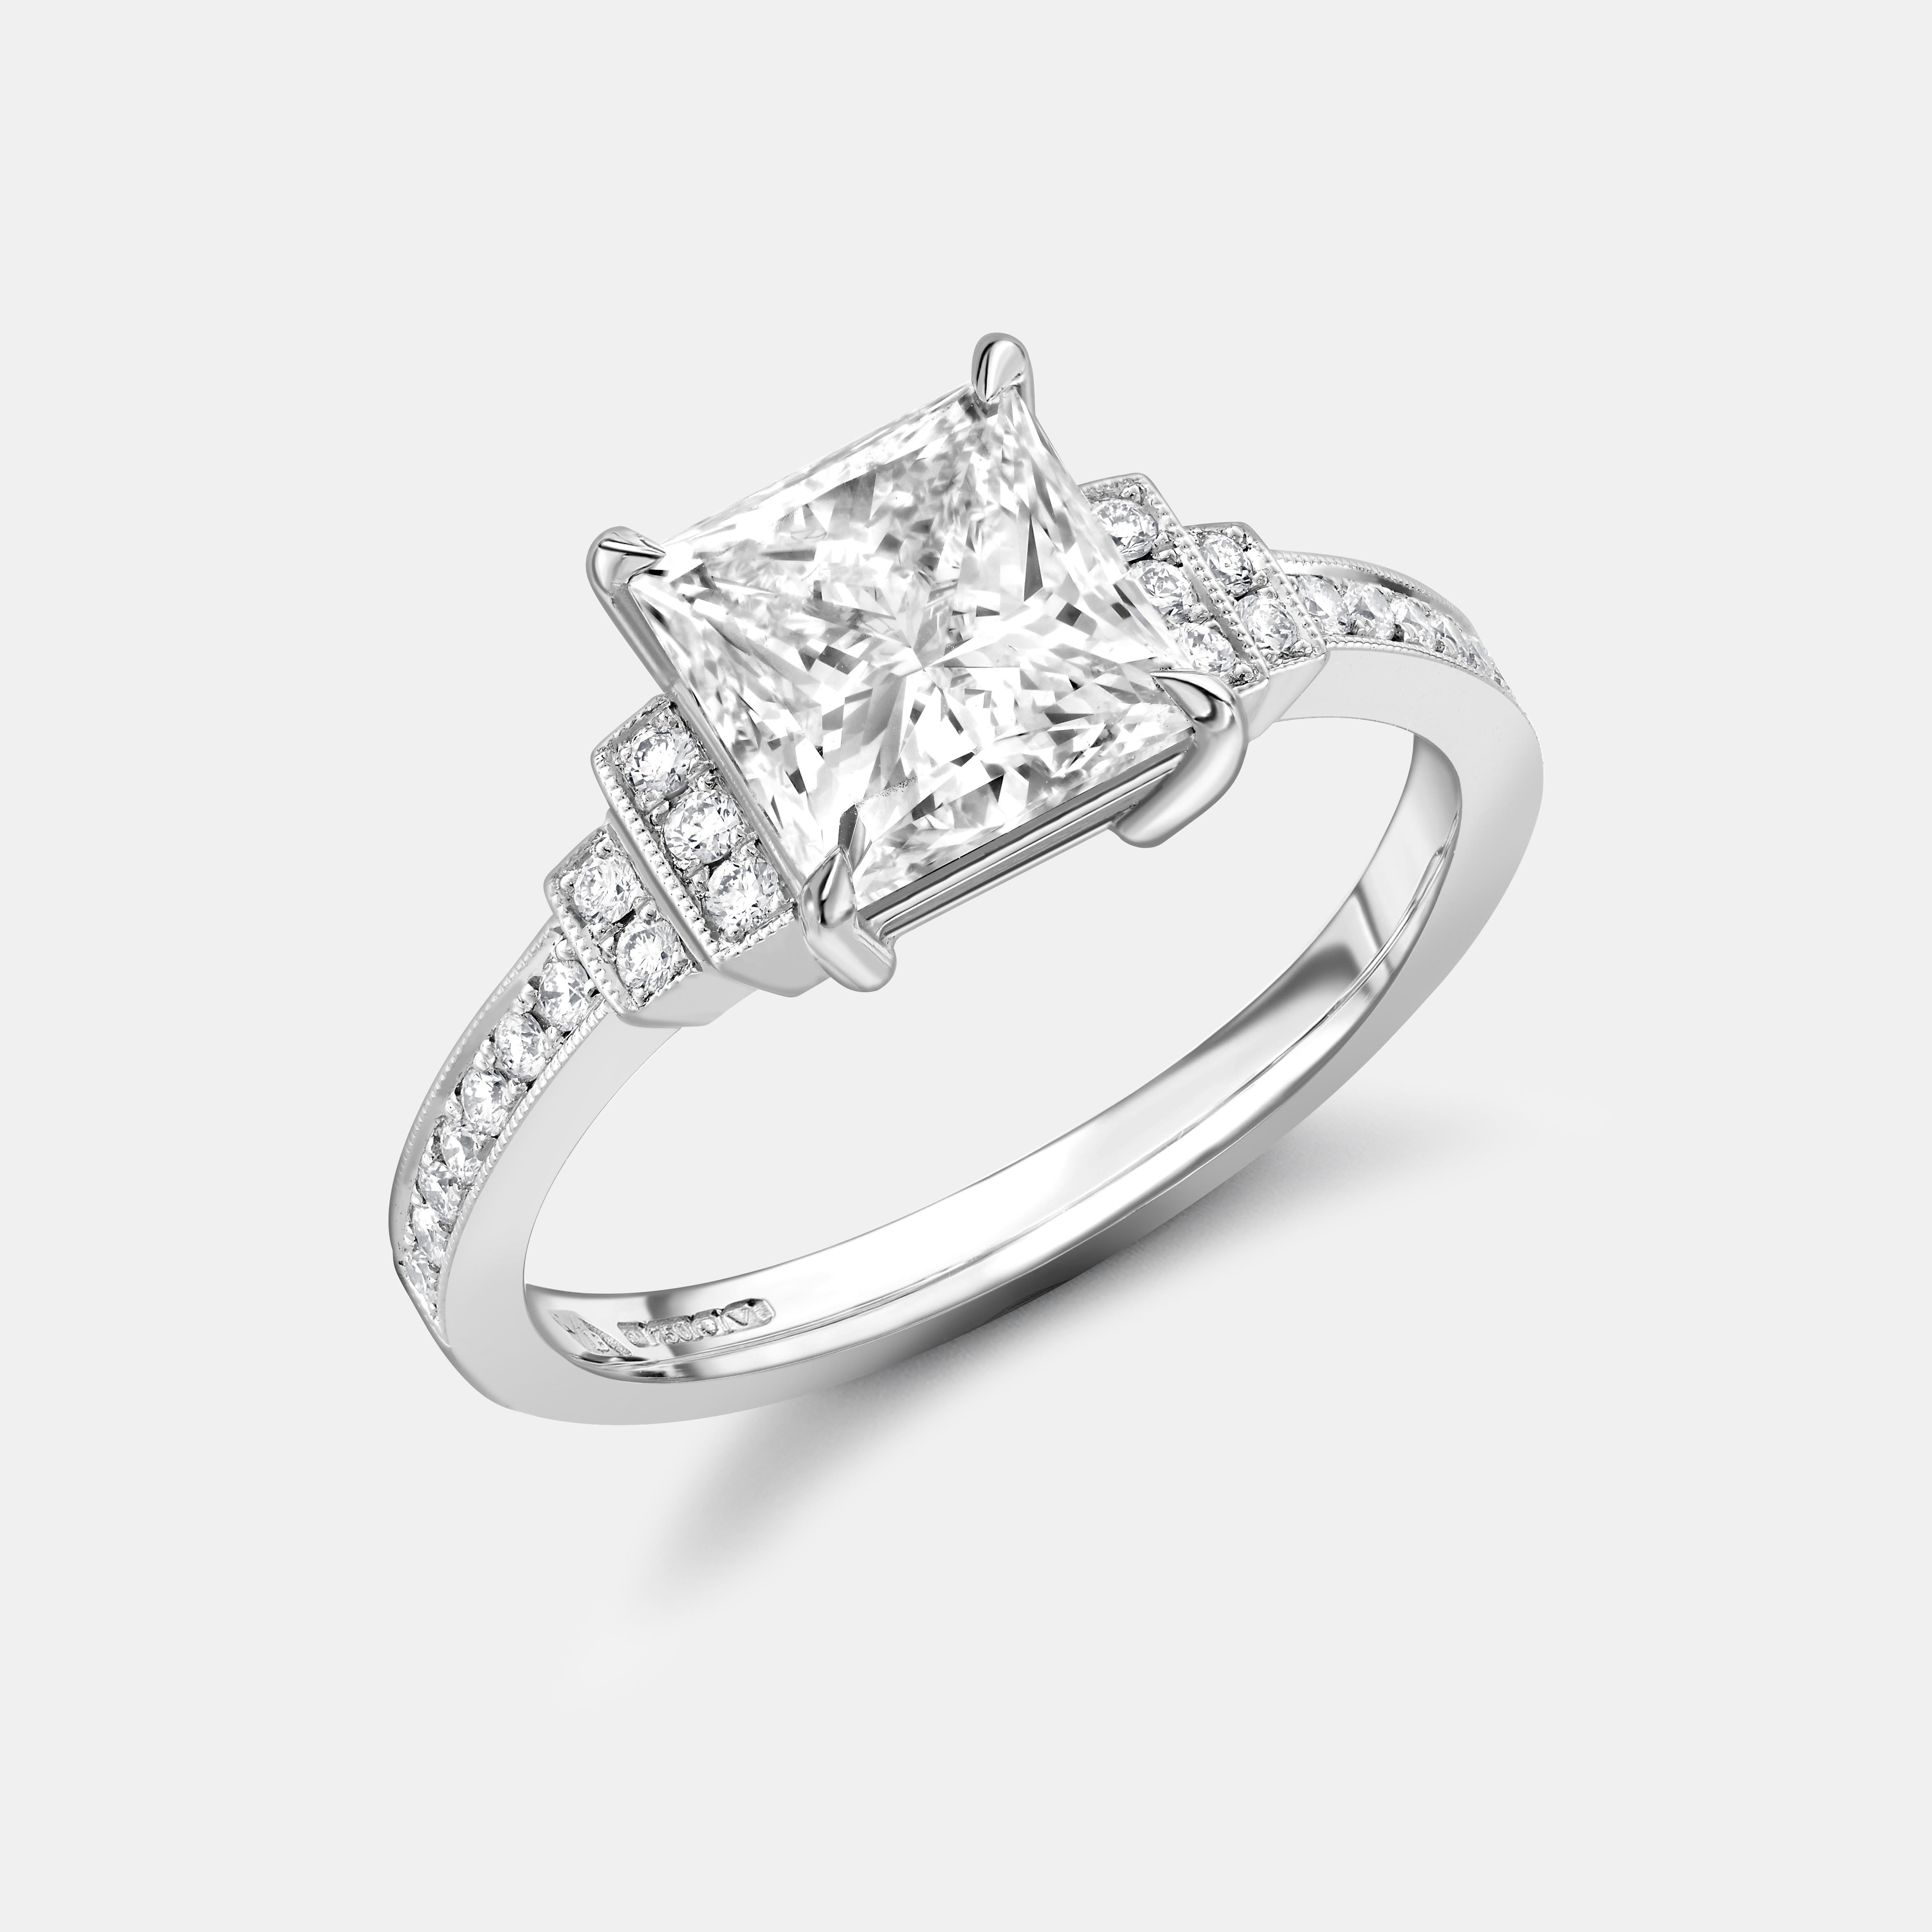 Bespoke Platinum 2.13ct Princess Cut Diamond Ring - 01-03-304